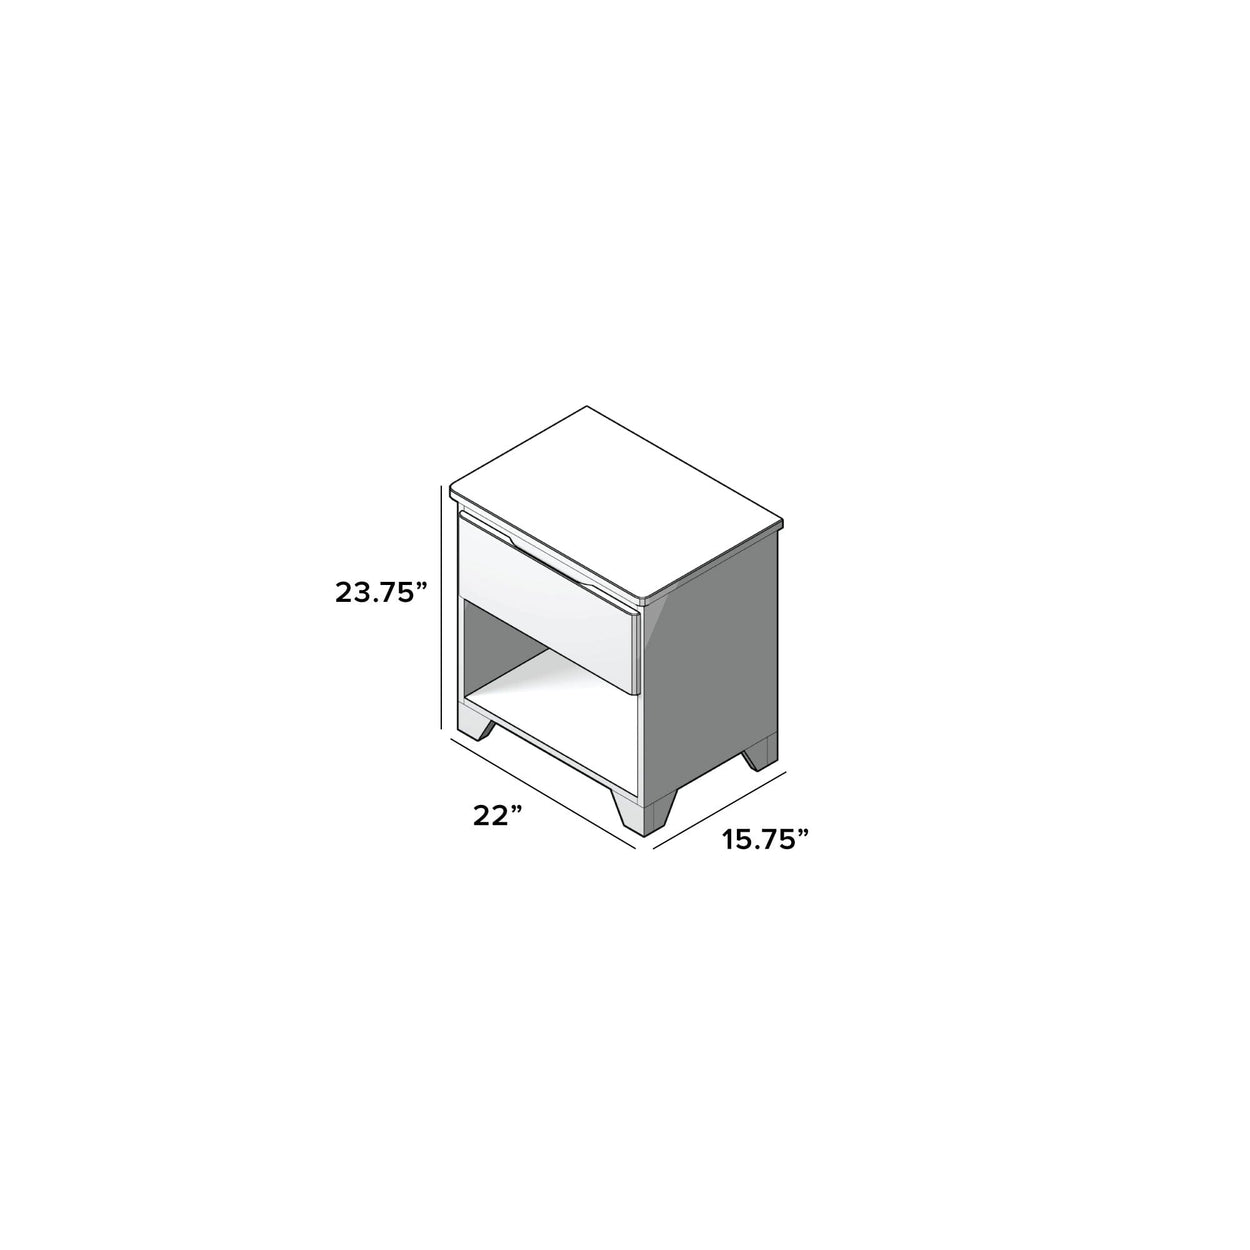 190001-181 : Furniture K/D 1 Drawer Nightstand w/ metal drawer glides (22"L x 15.75"W x 23.75"H), Barnwood Brown